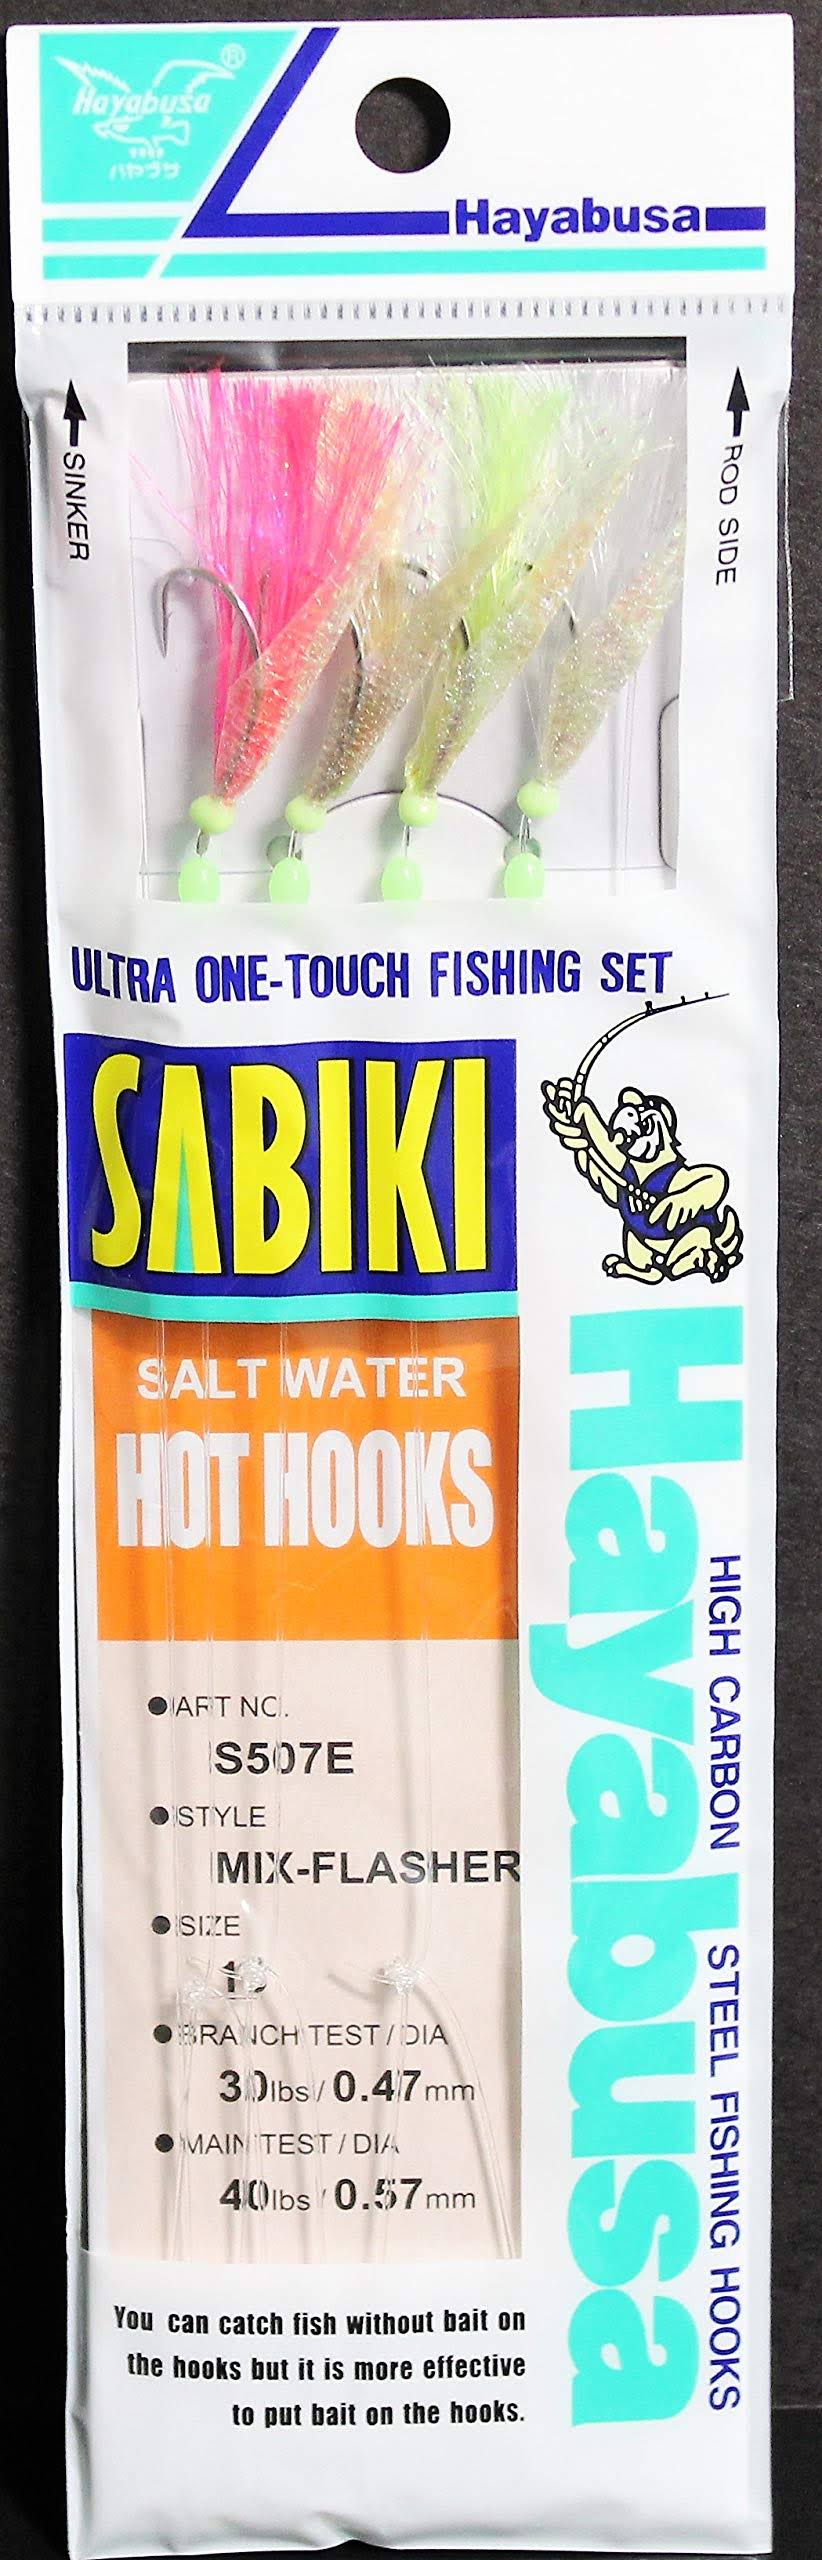 Hayabusa Sabiki Mix-Flasher Hot Hooks Fishing Rig